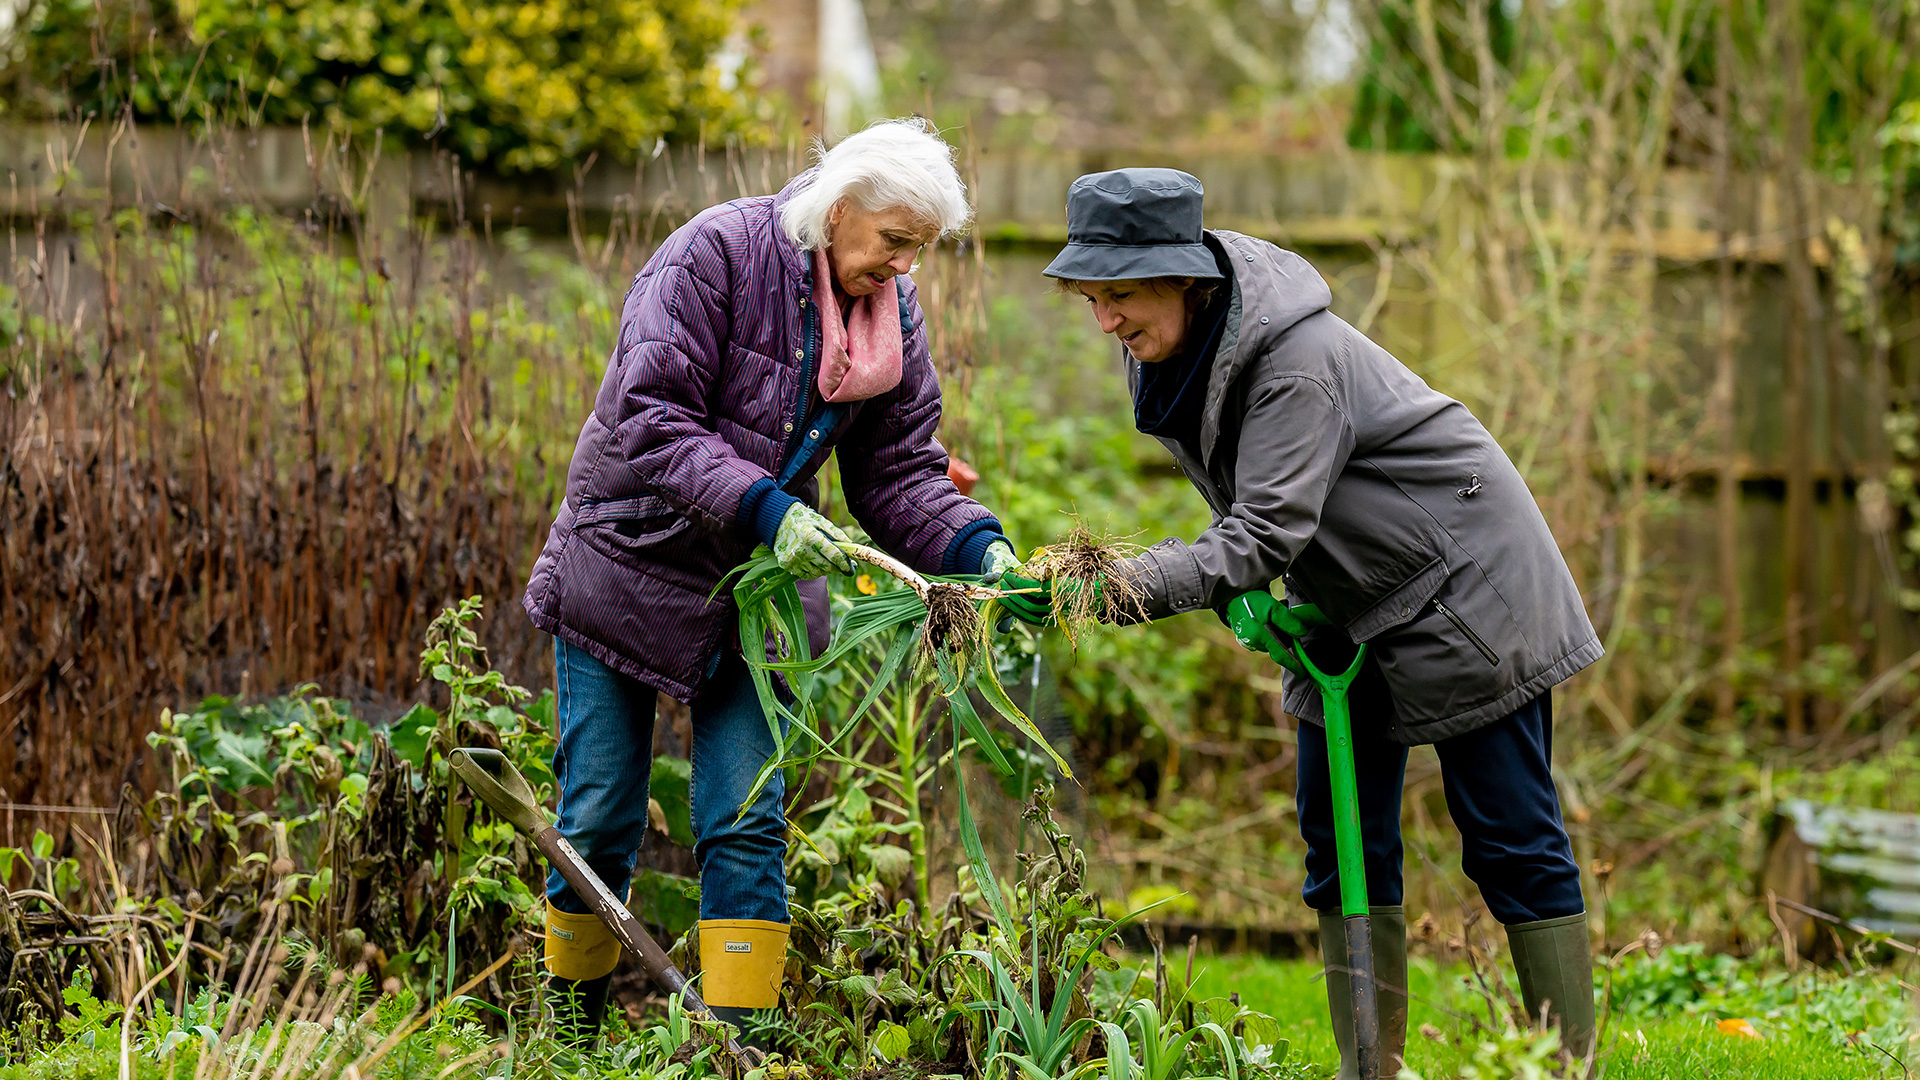 Two older women work in a garden